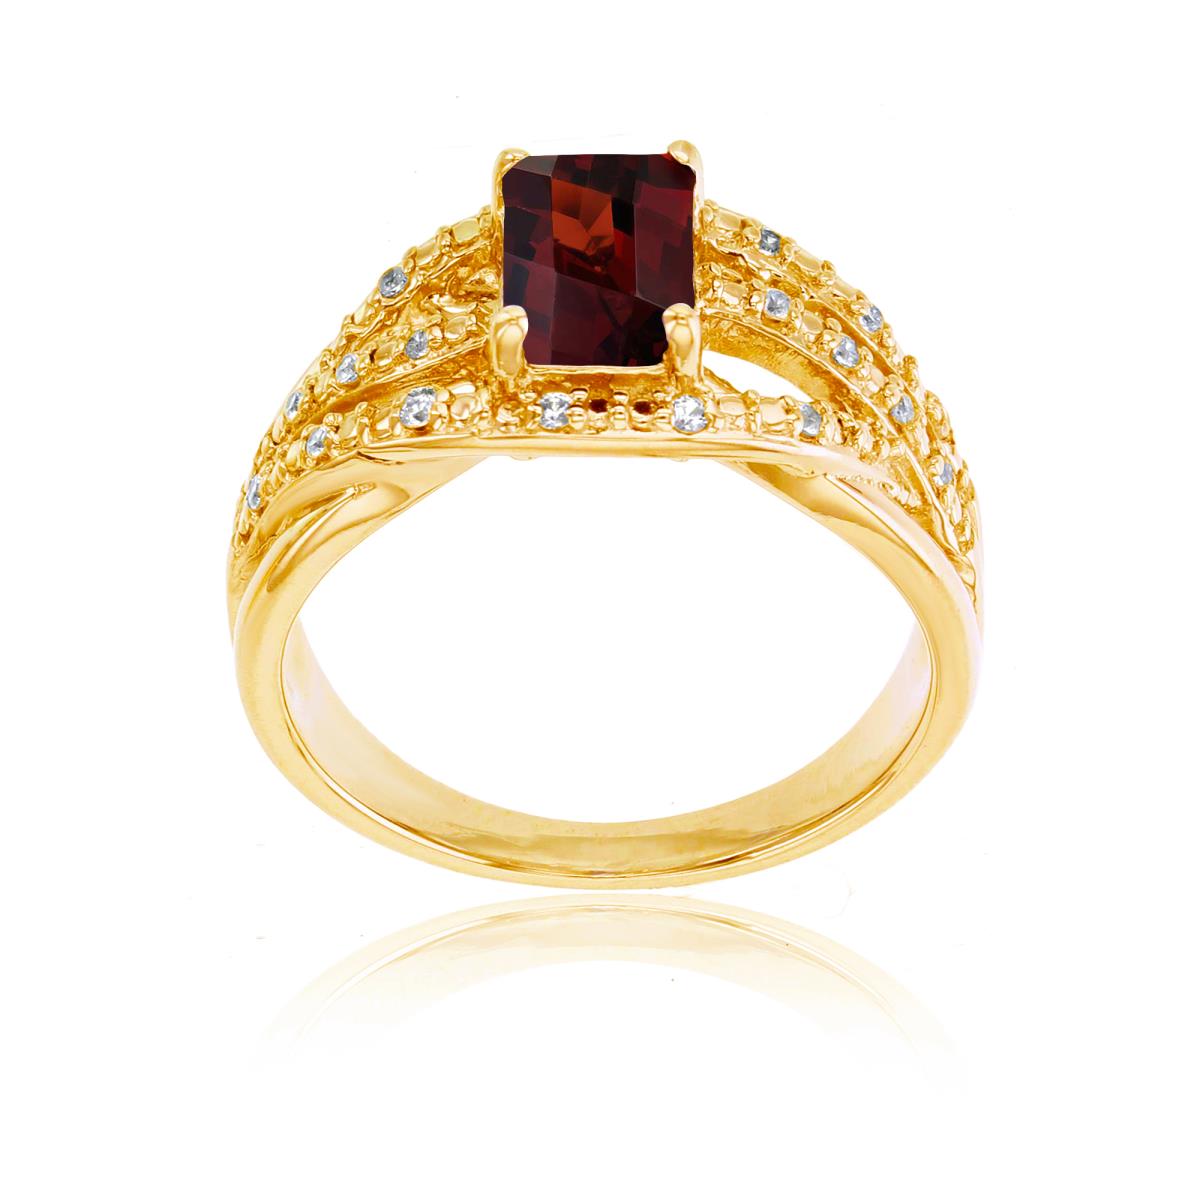 10K Yellow Gold 0.10 CTTW Rnd Diamond & 7x5mm Oct Garnet Ring